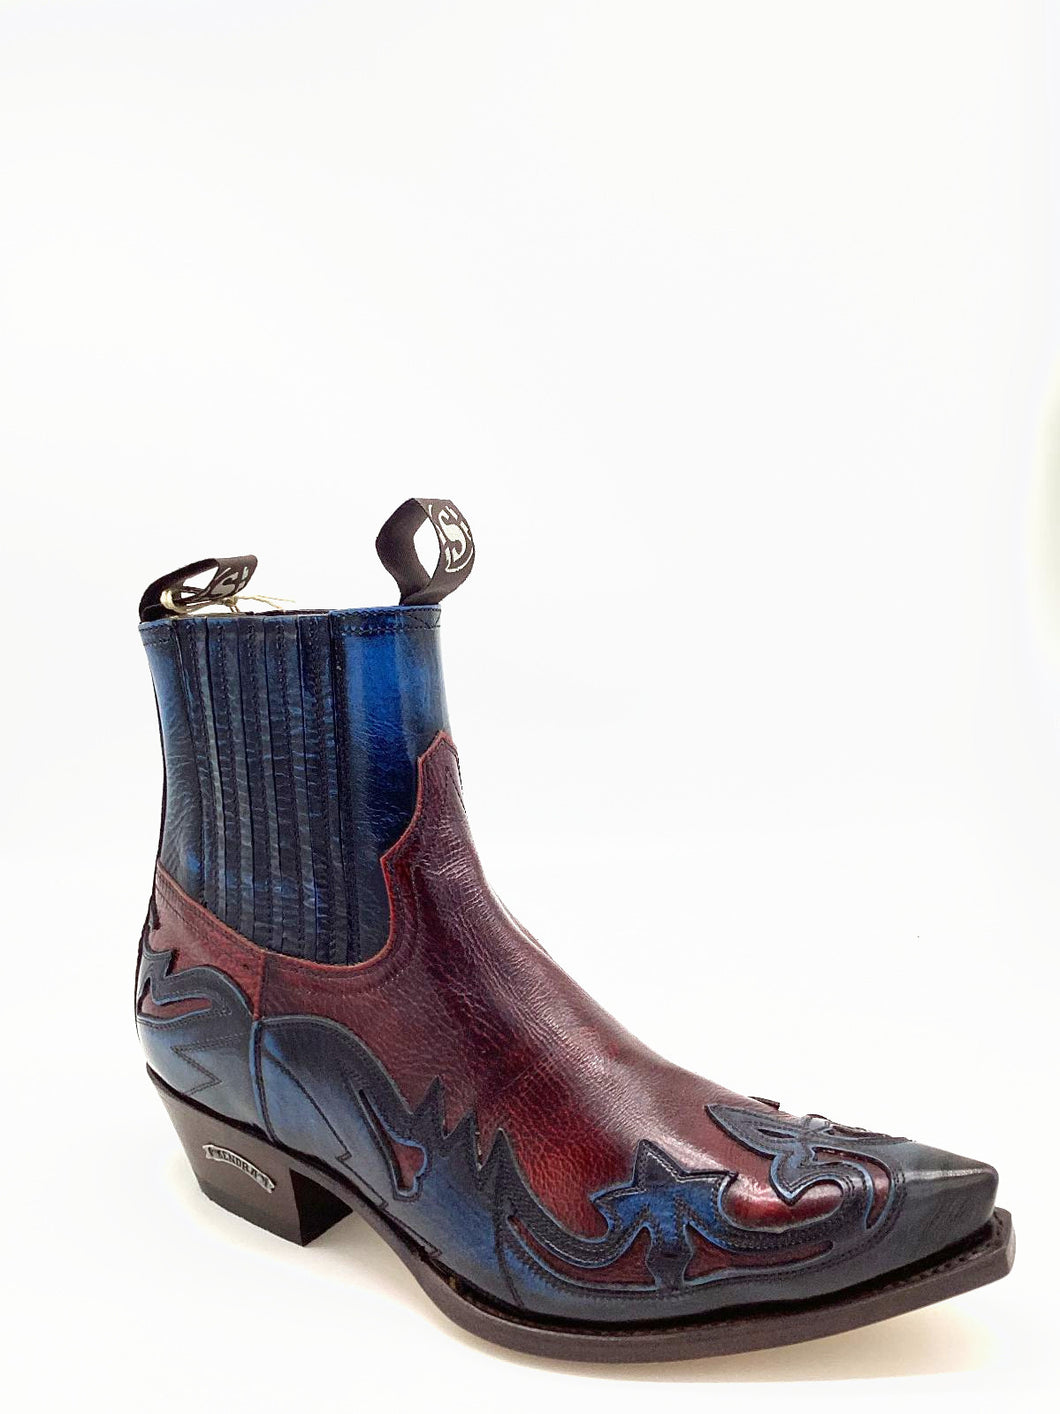 Sendra Boots Stiefelette Navy/Rot Echtleder Western/Cowboy Exklusiv & Limitiert